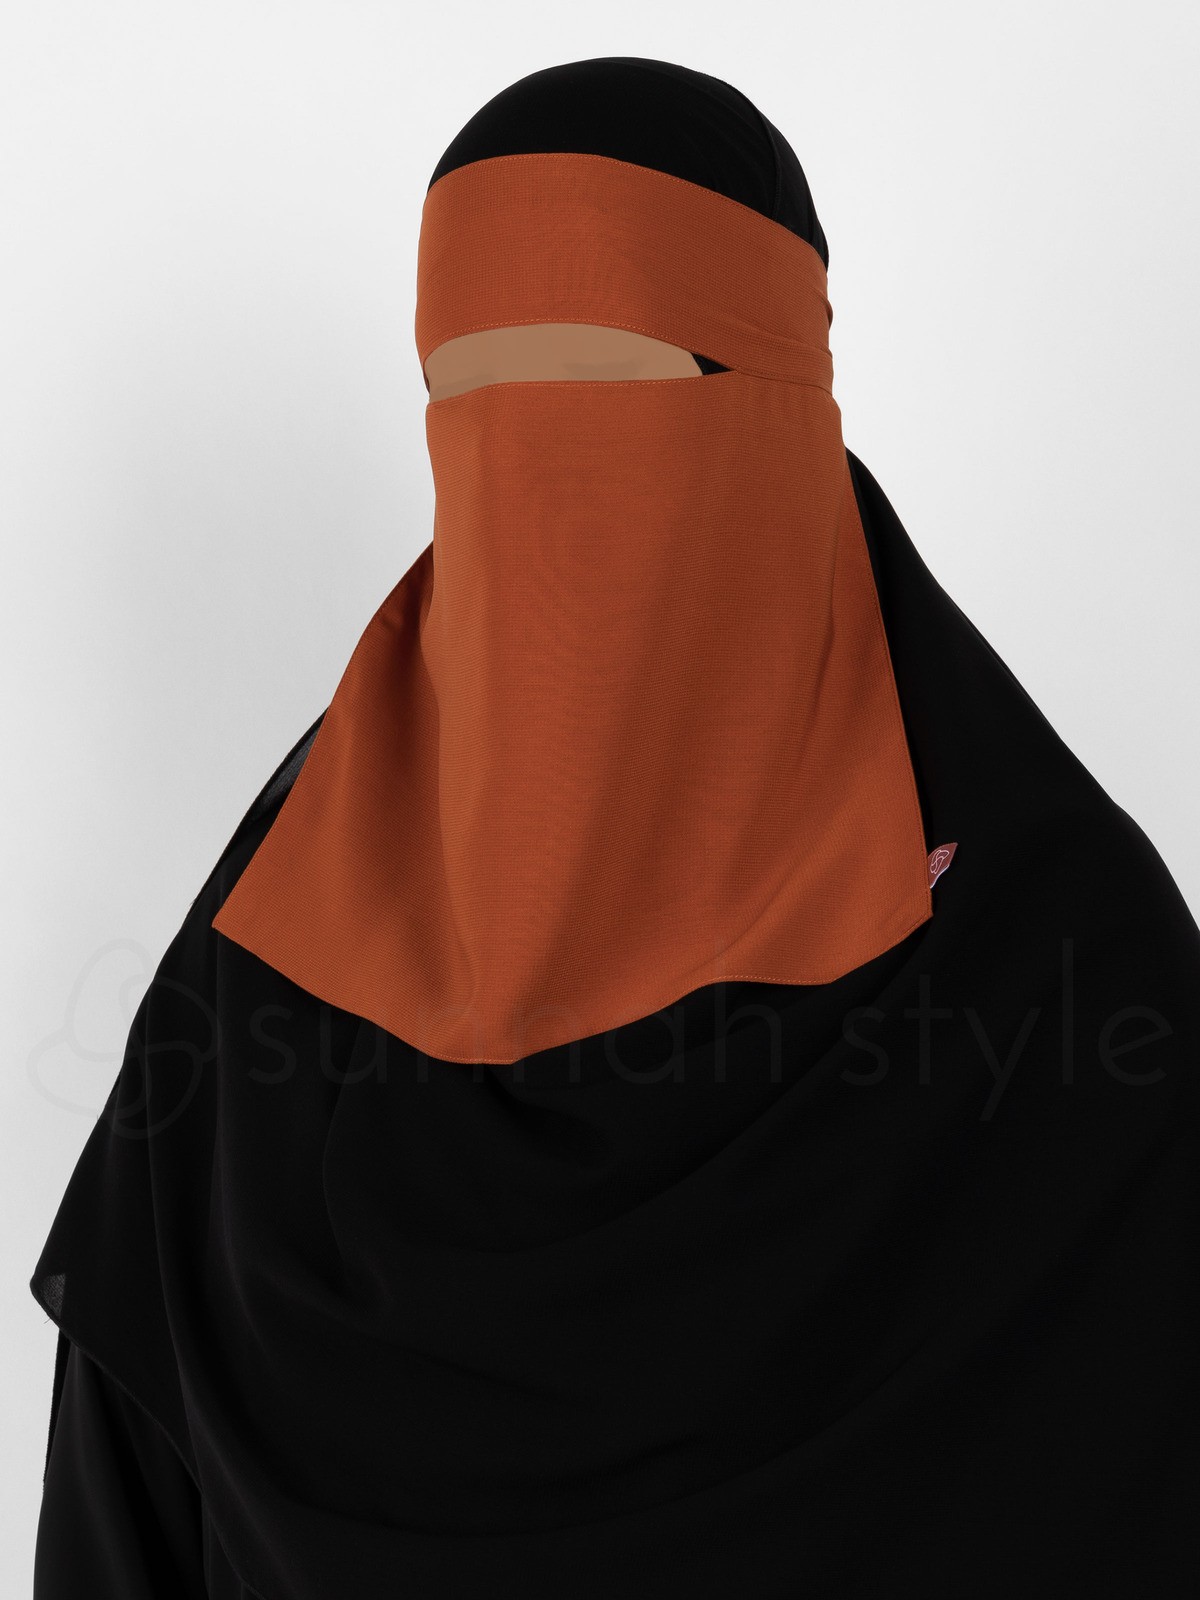 Sunnah Style - Short One Layer Niqab (Autumn)